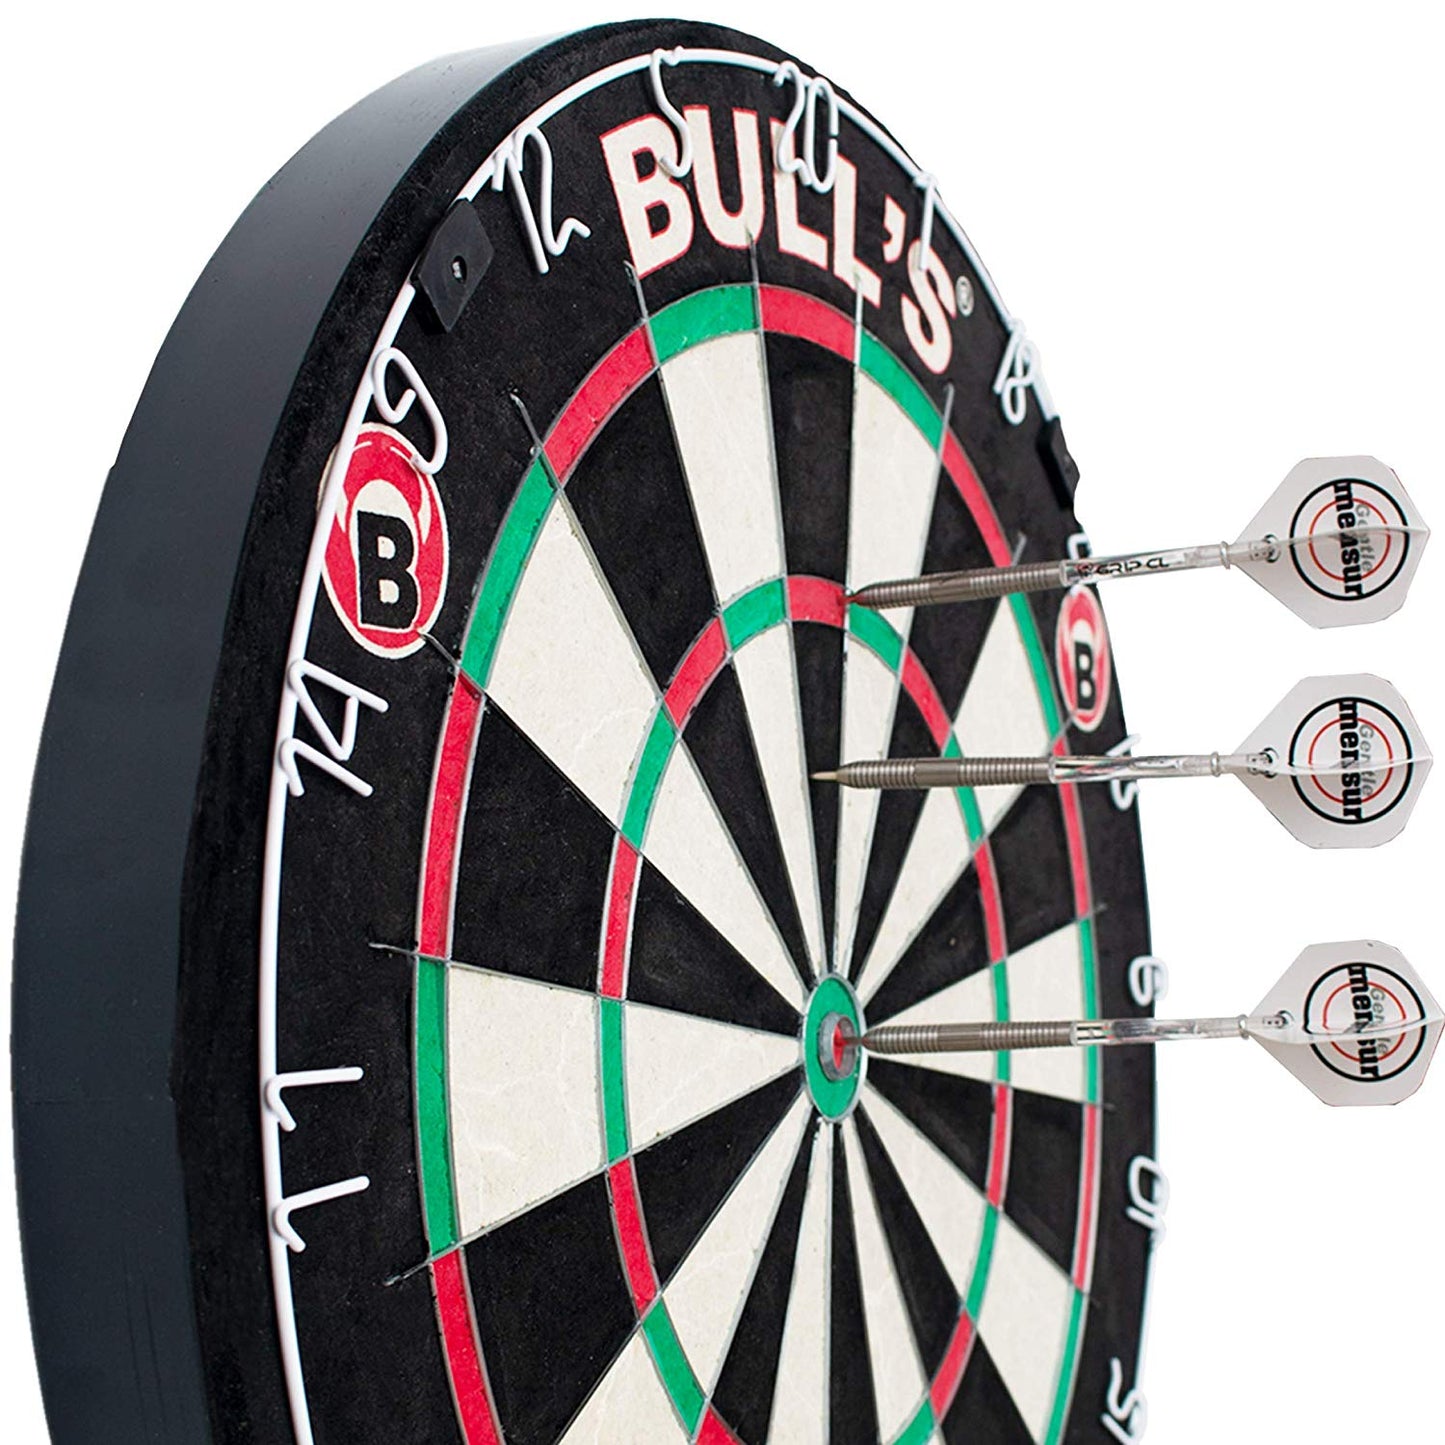 BULL'S Focus II Bristle Dart Board